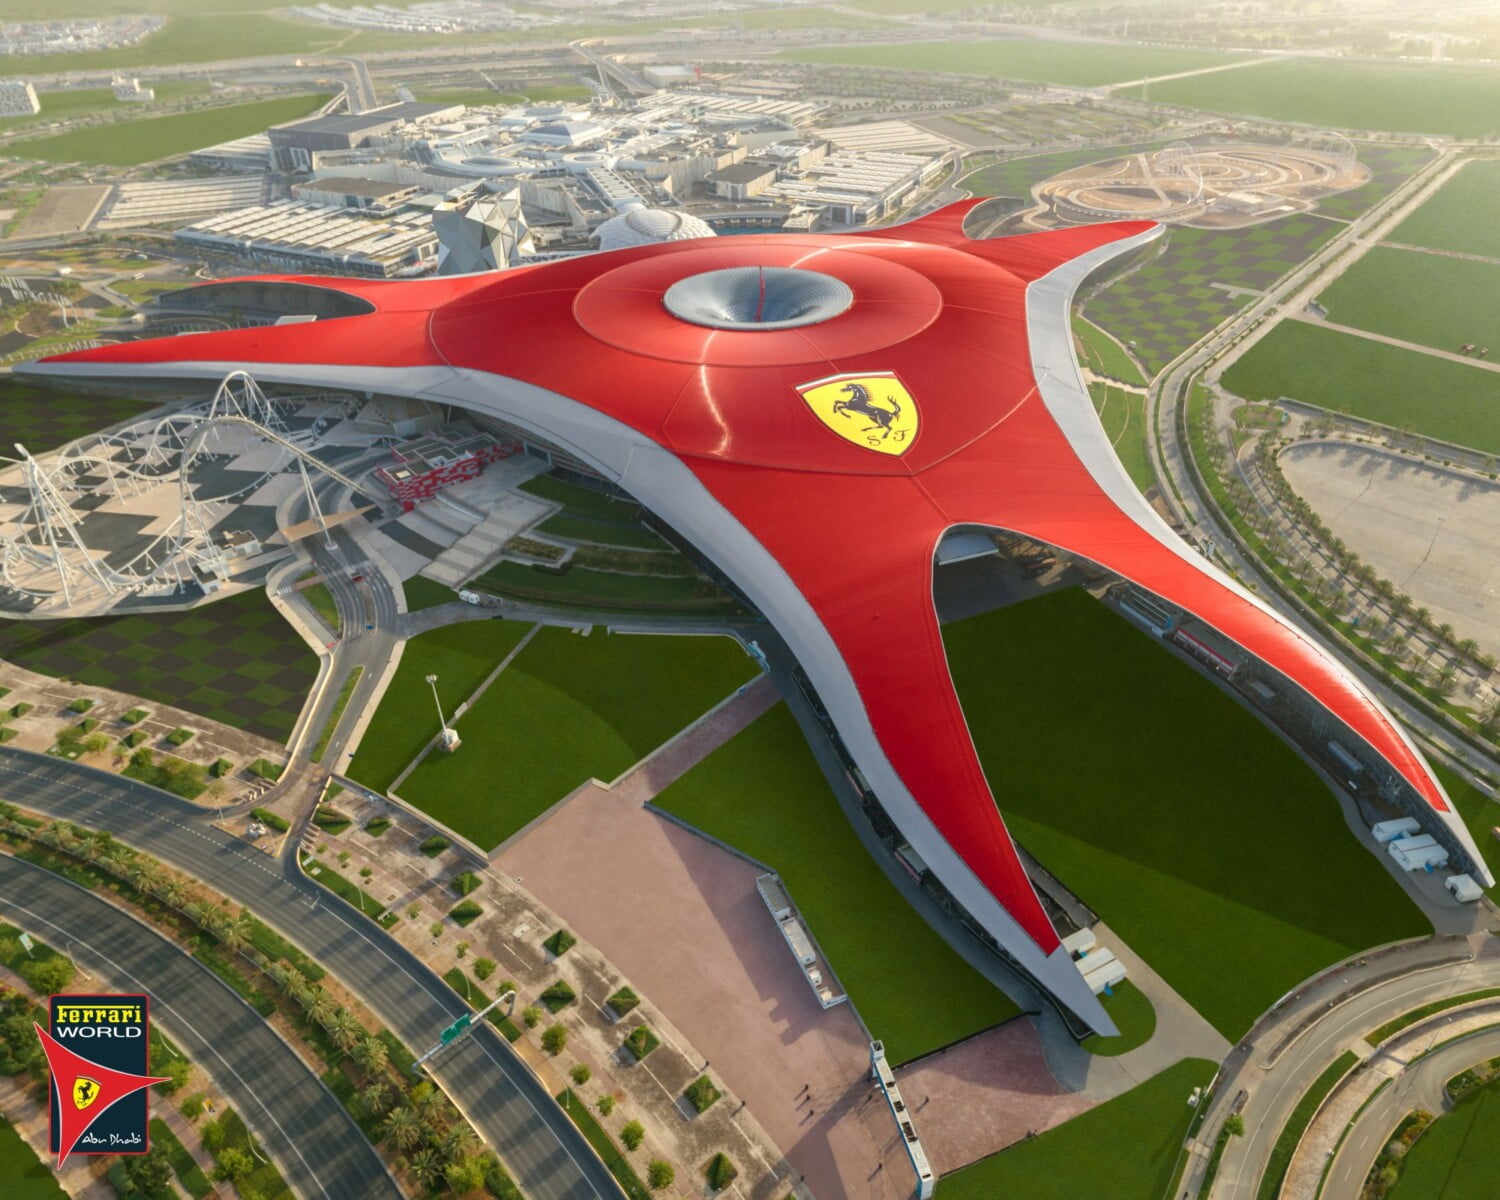 Best Abu Dhabi Day Tour With Ferrari World Ticket